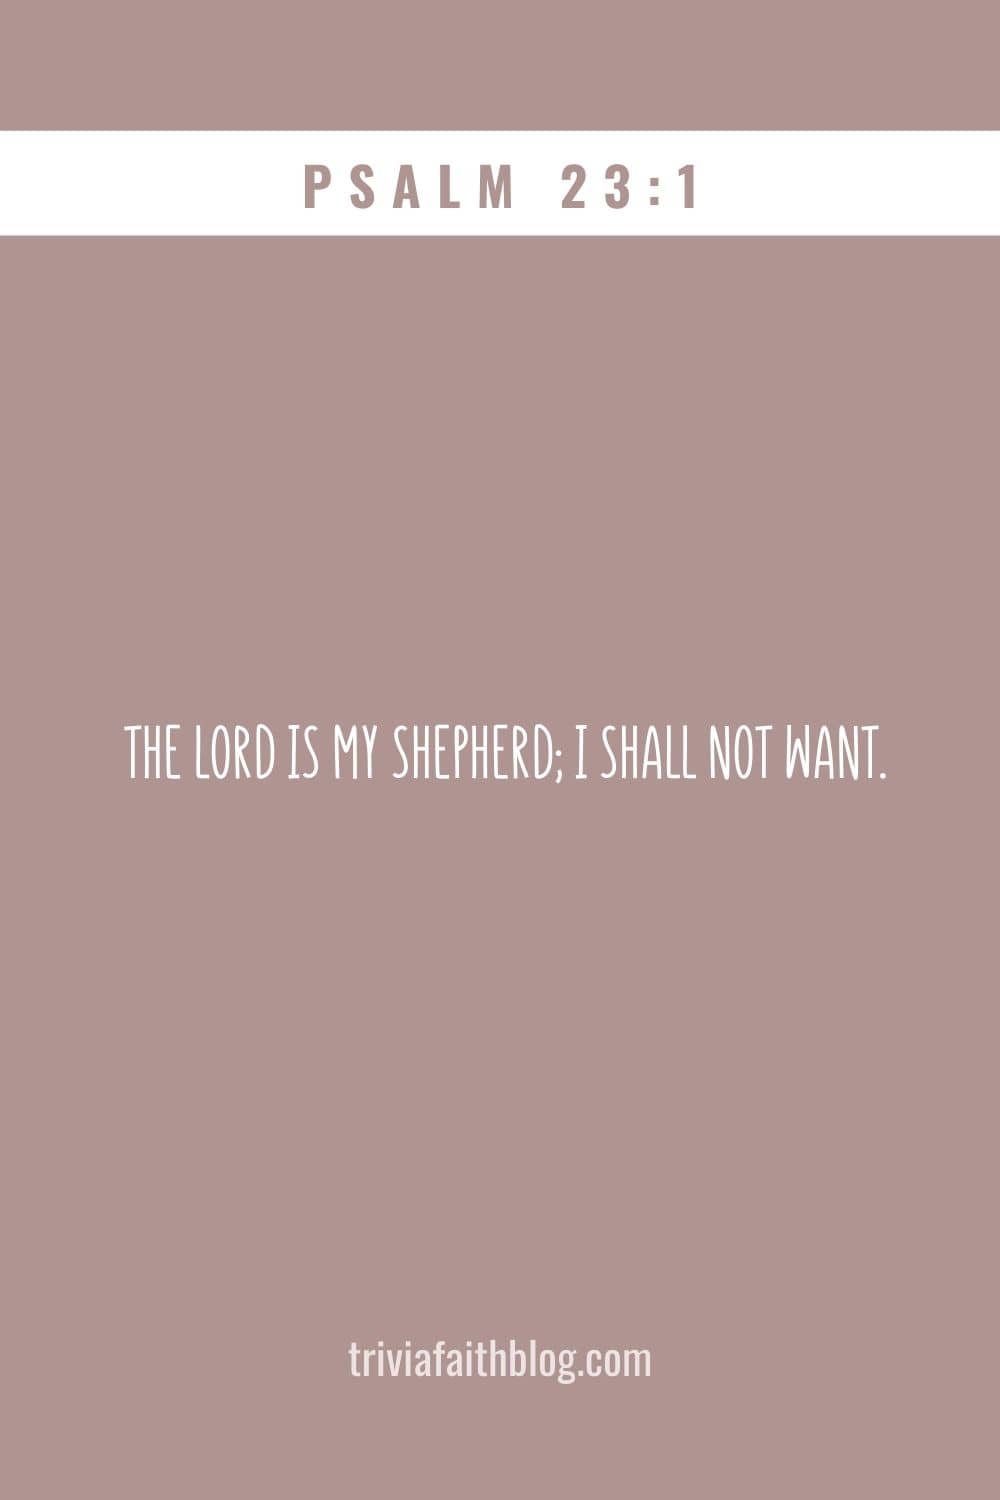 The Lord is my shepherd, I lack nothing. god the good shepherd